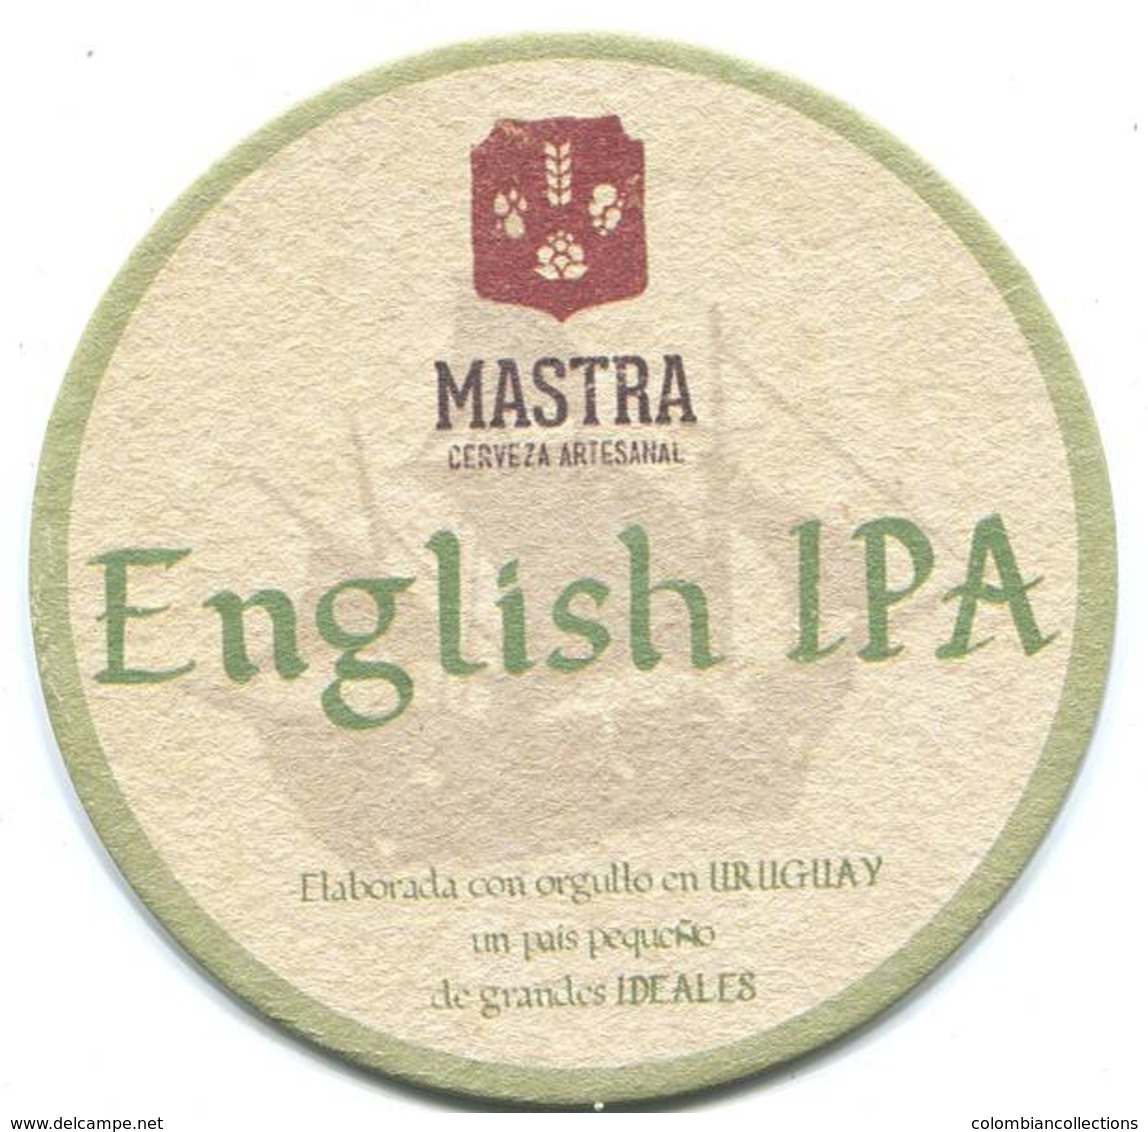 Lote U9, Uruguay, Posavaso, Coaster, Mastra, English IPA - Portavasos